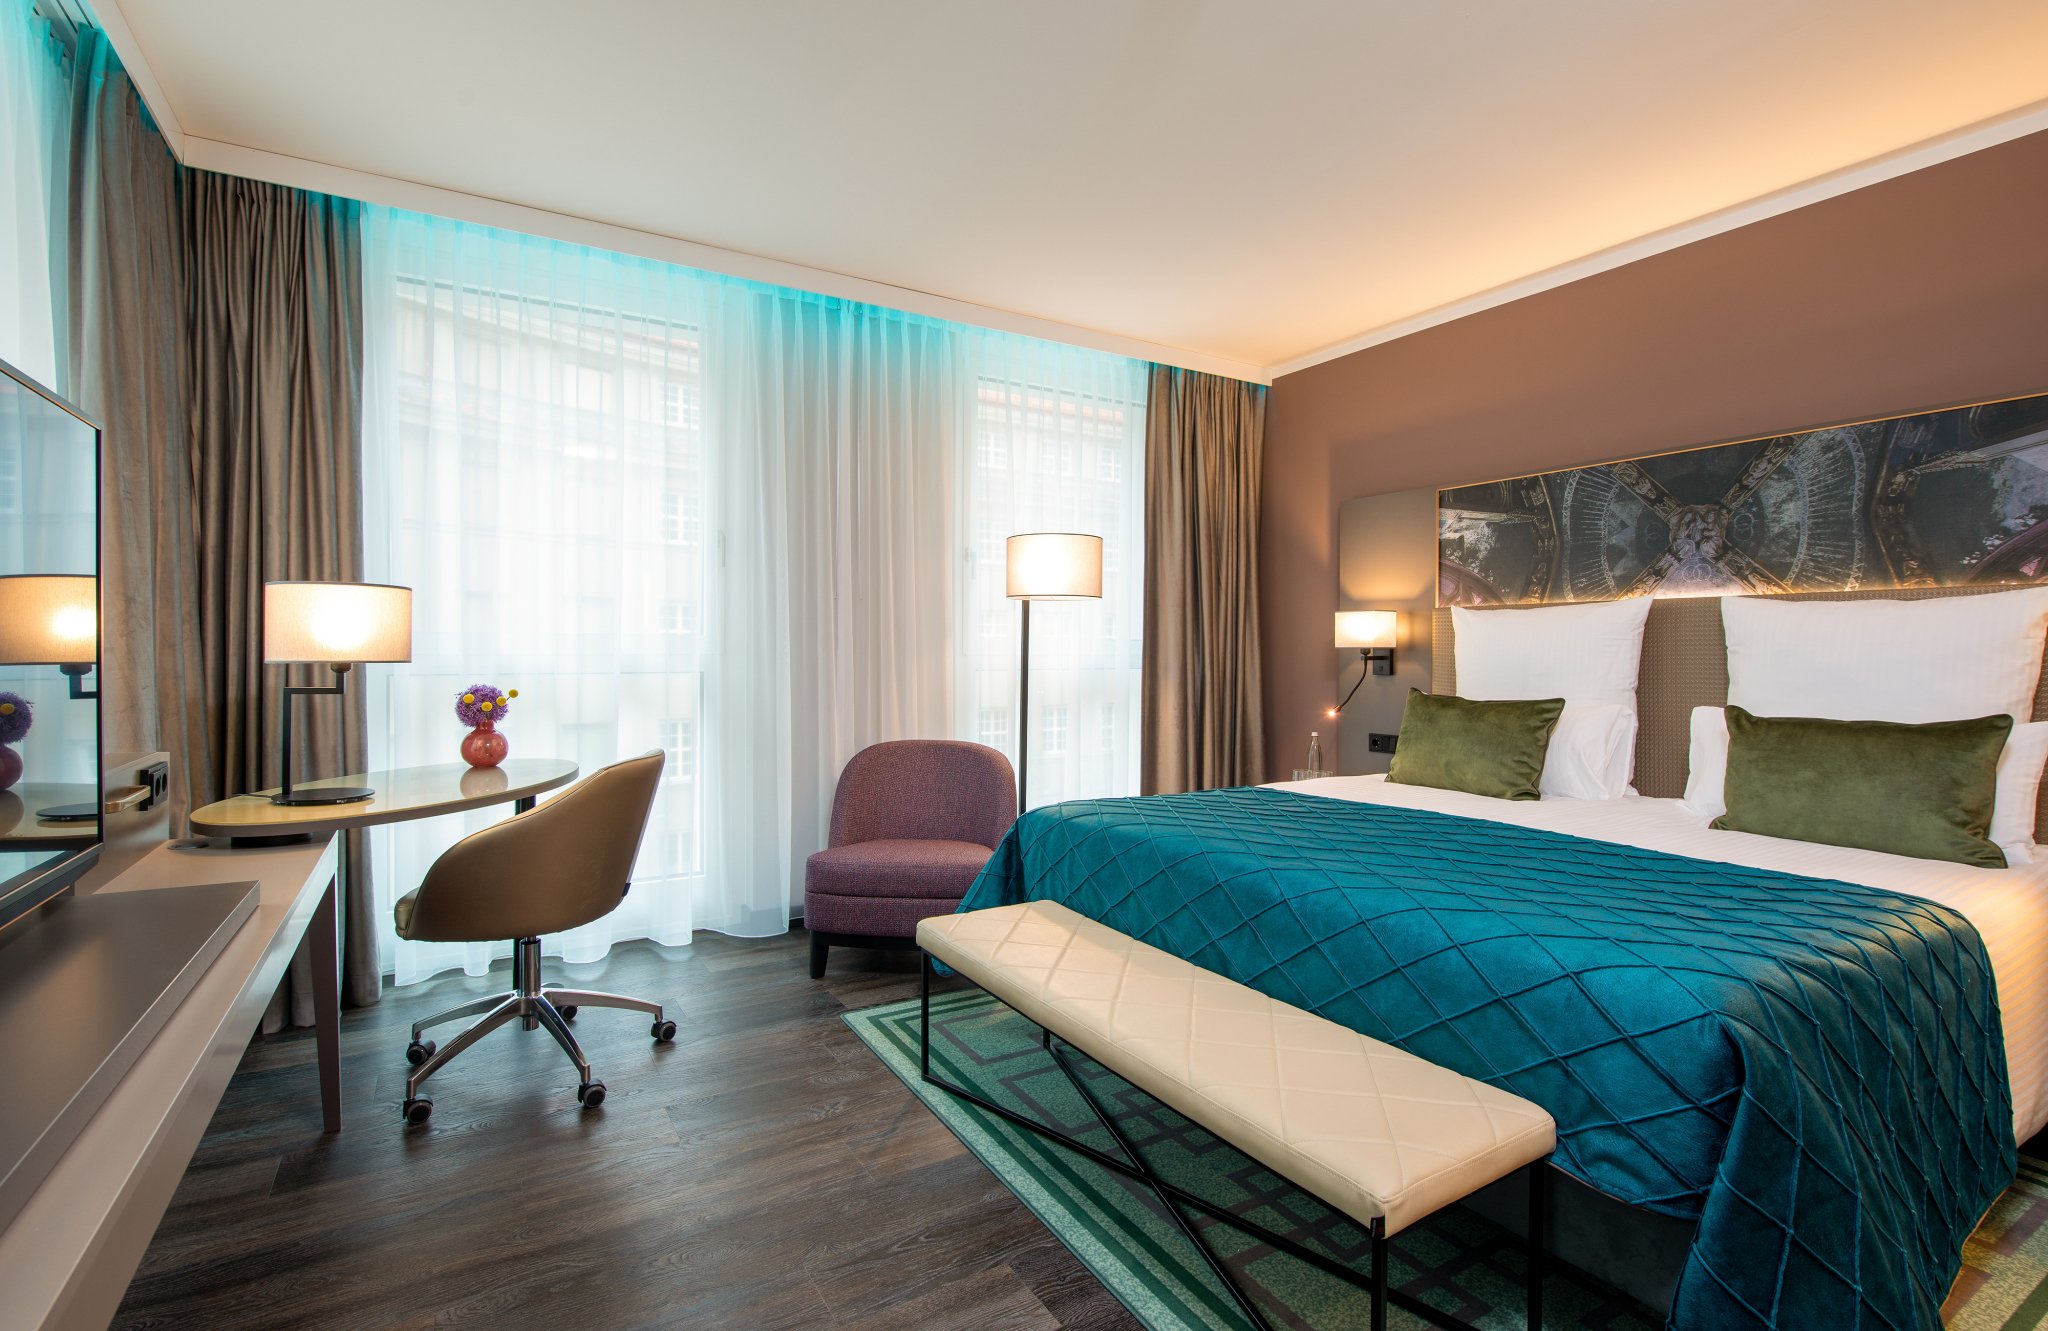 Leonardo Royal Hotel Nürnberg - Comfort Room